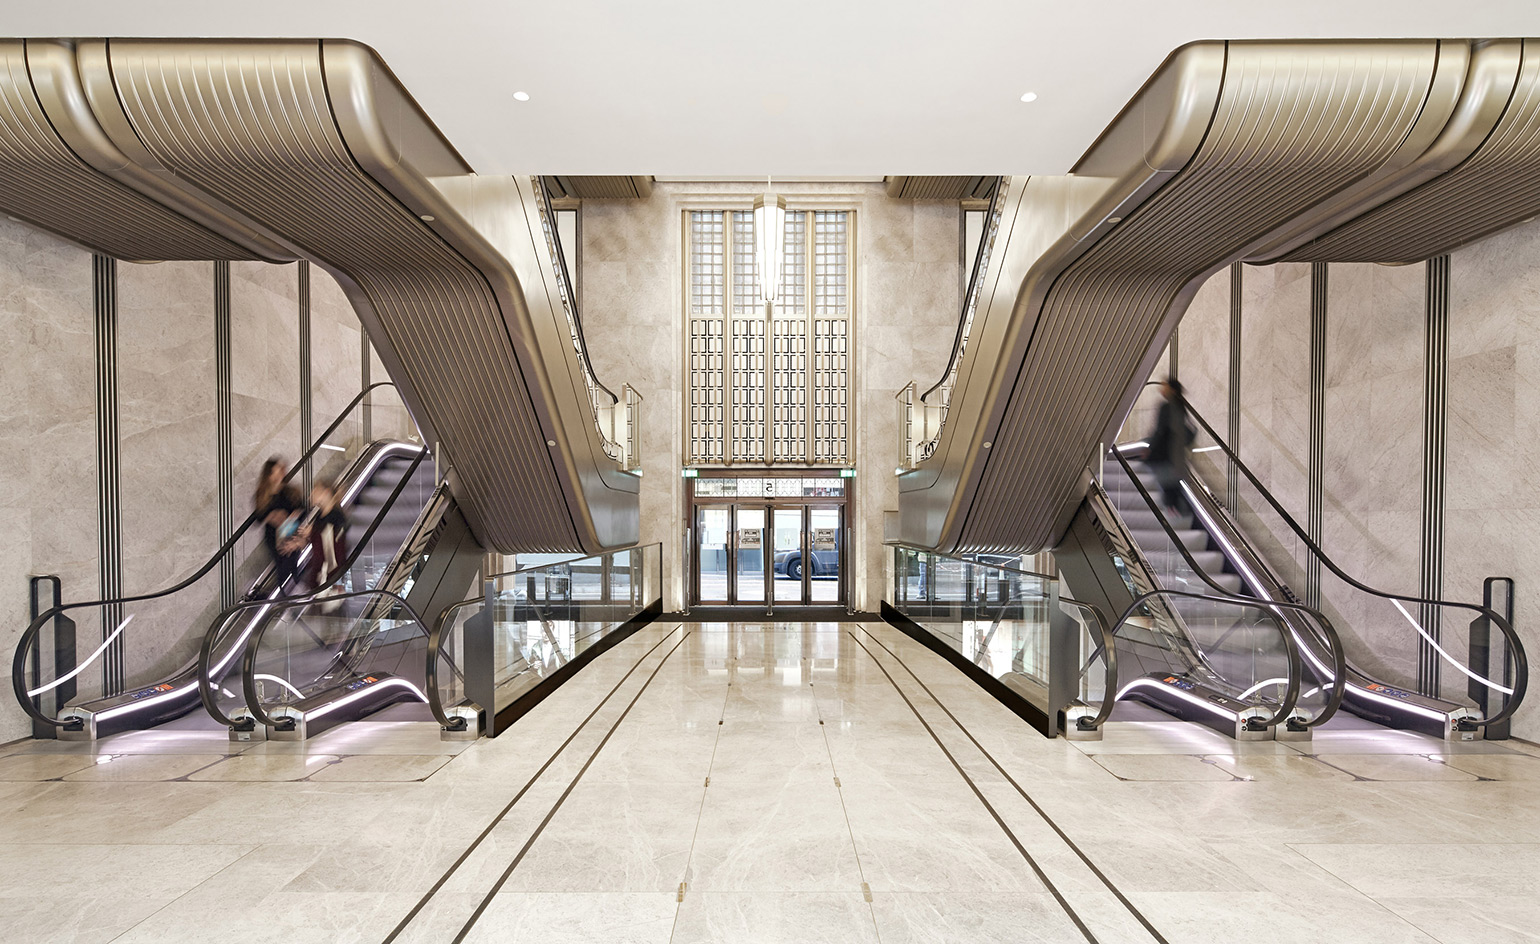 harrods wallpaper,escalator,lobby,architecture,building,symmetry